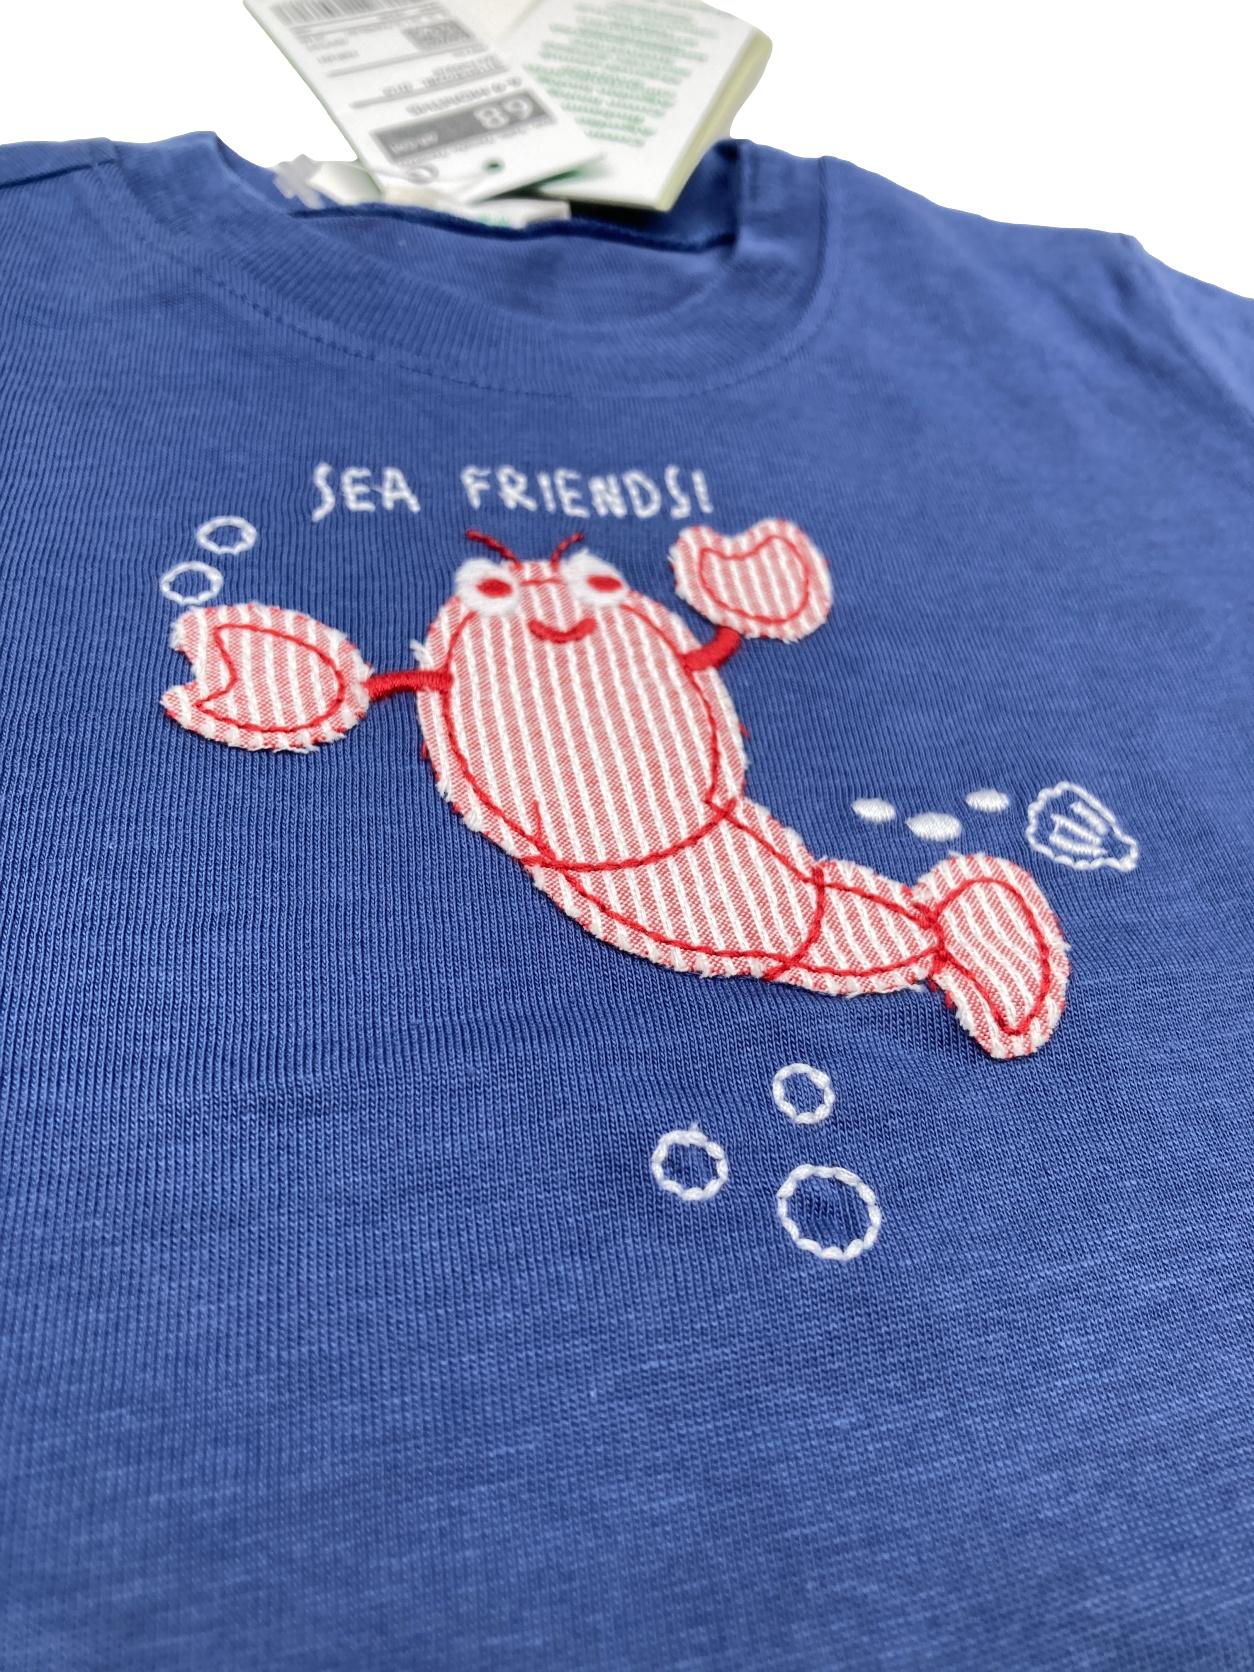 T-Shirt Sea Friends 6-9 Meses - BENETTON - Petit Fox